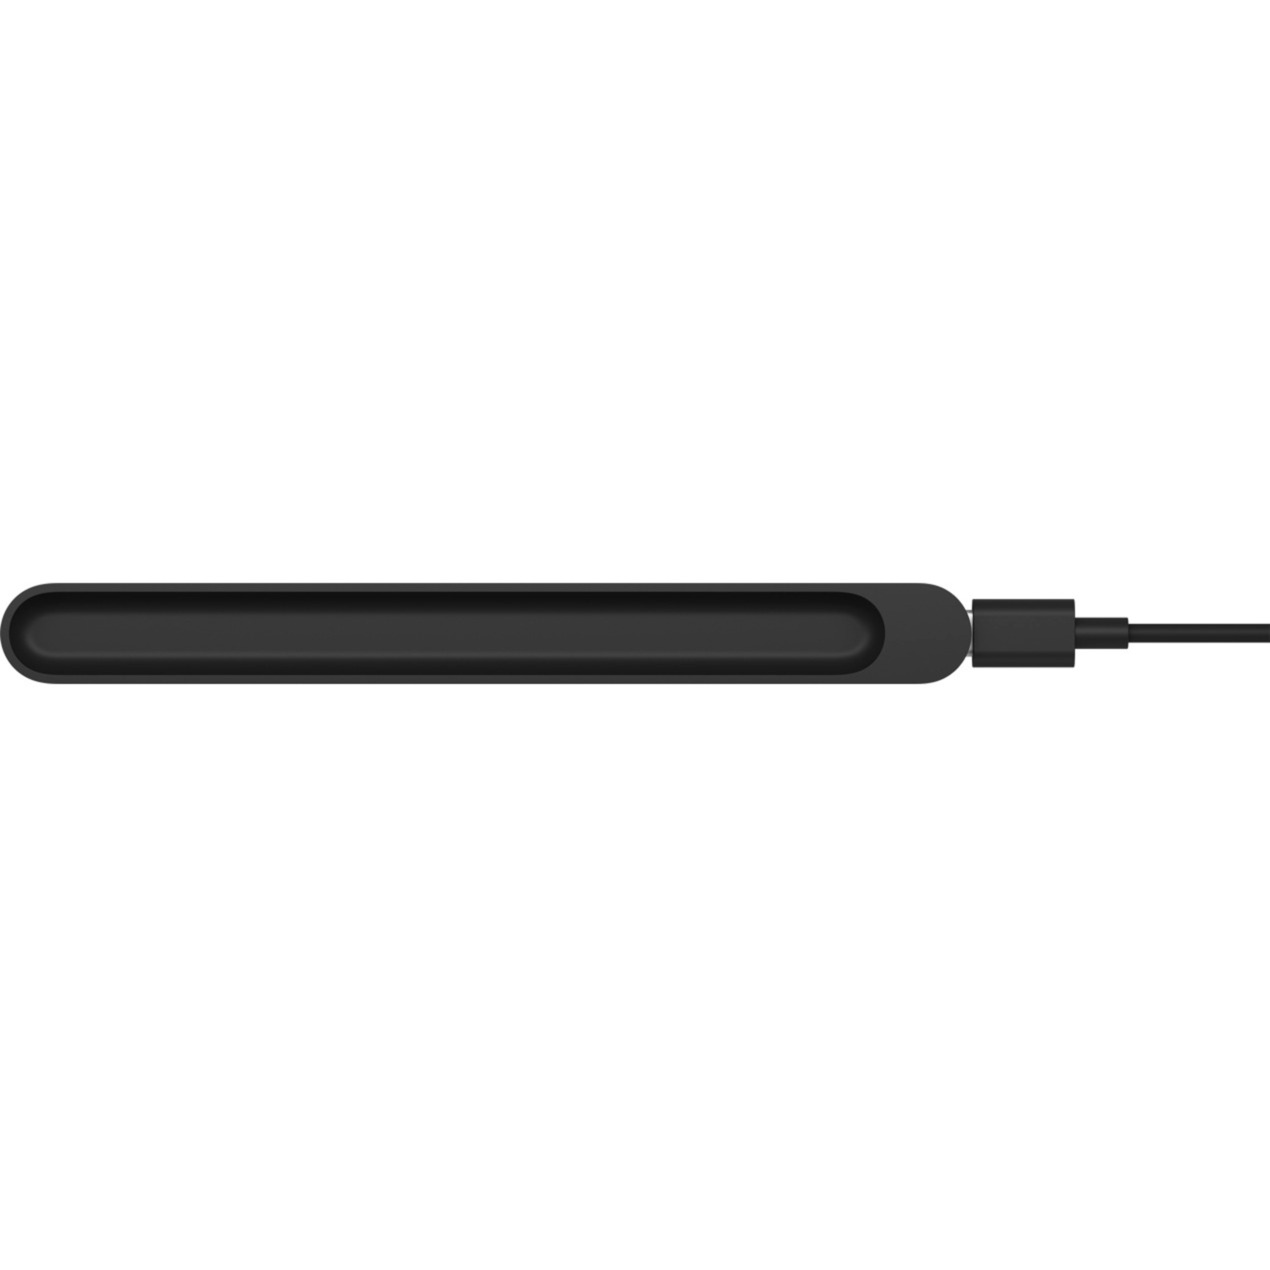 Surface Slim Pen Ladegerät von Microsoft